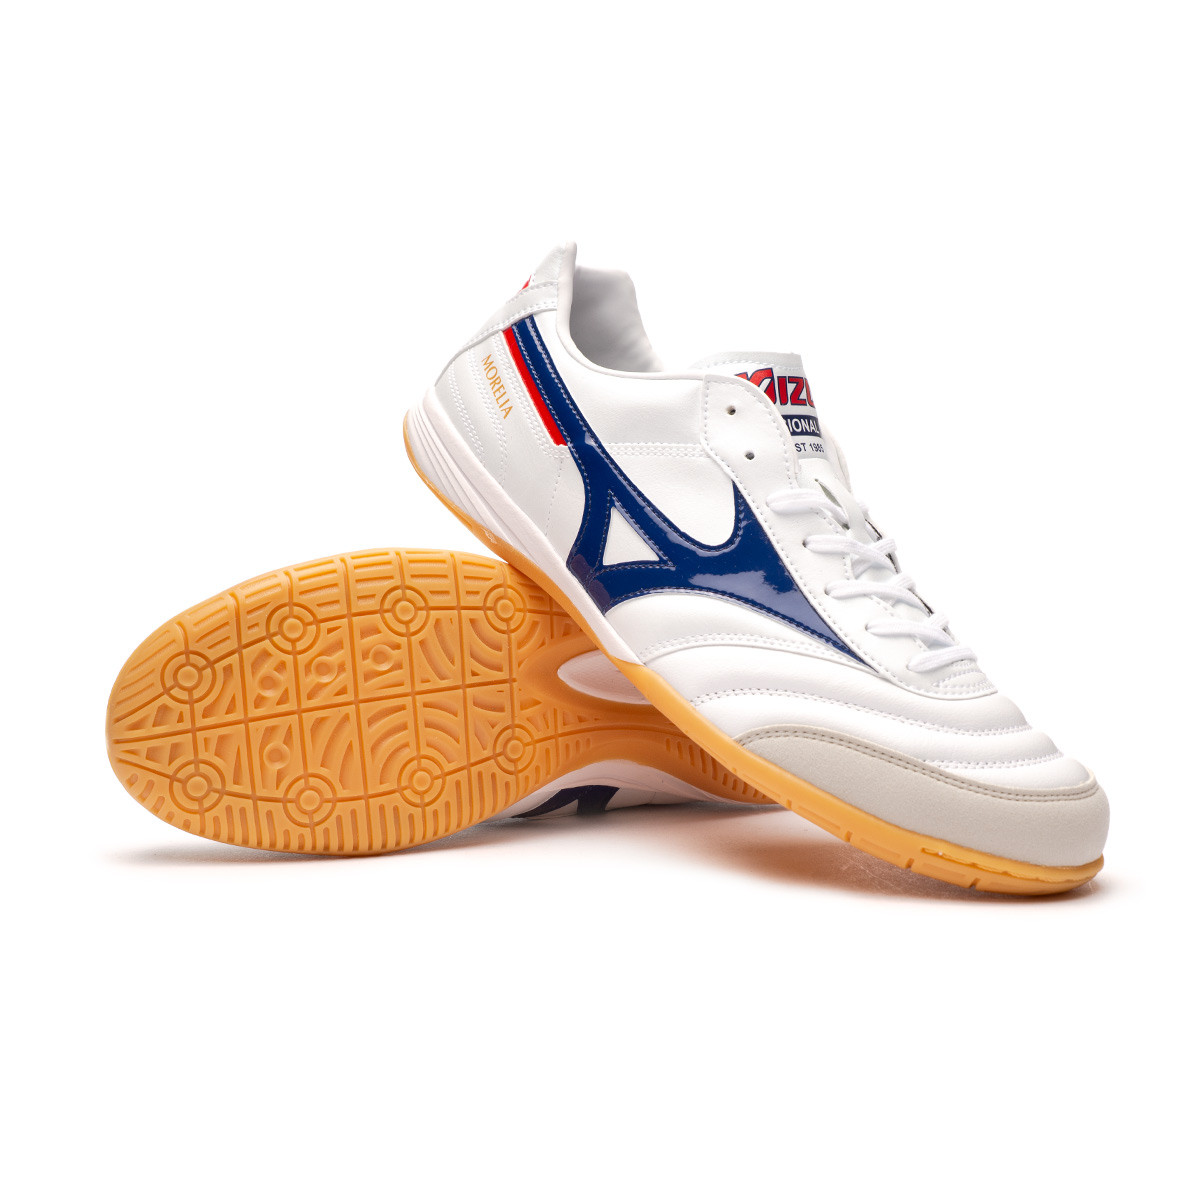 New Mizuno MORELIA IN Soccer Futsal Indoor Football Shoes Q1GA1700 White x Black 